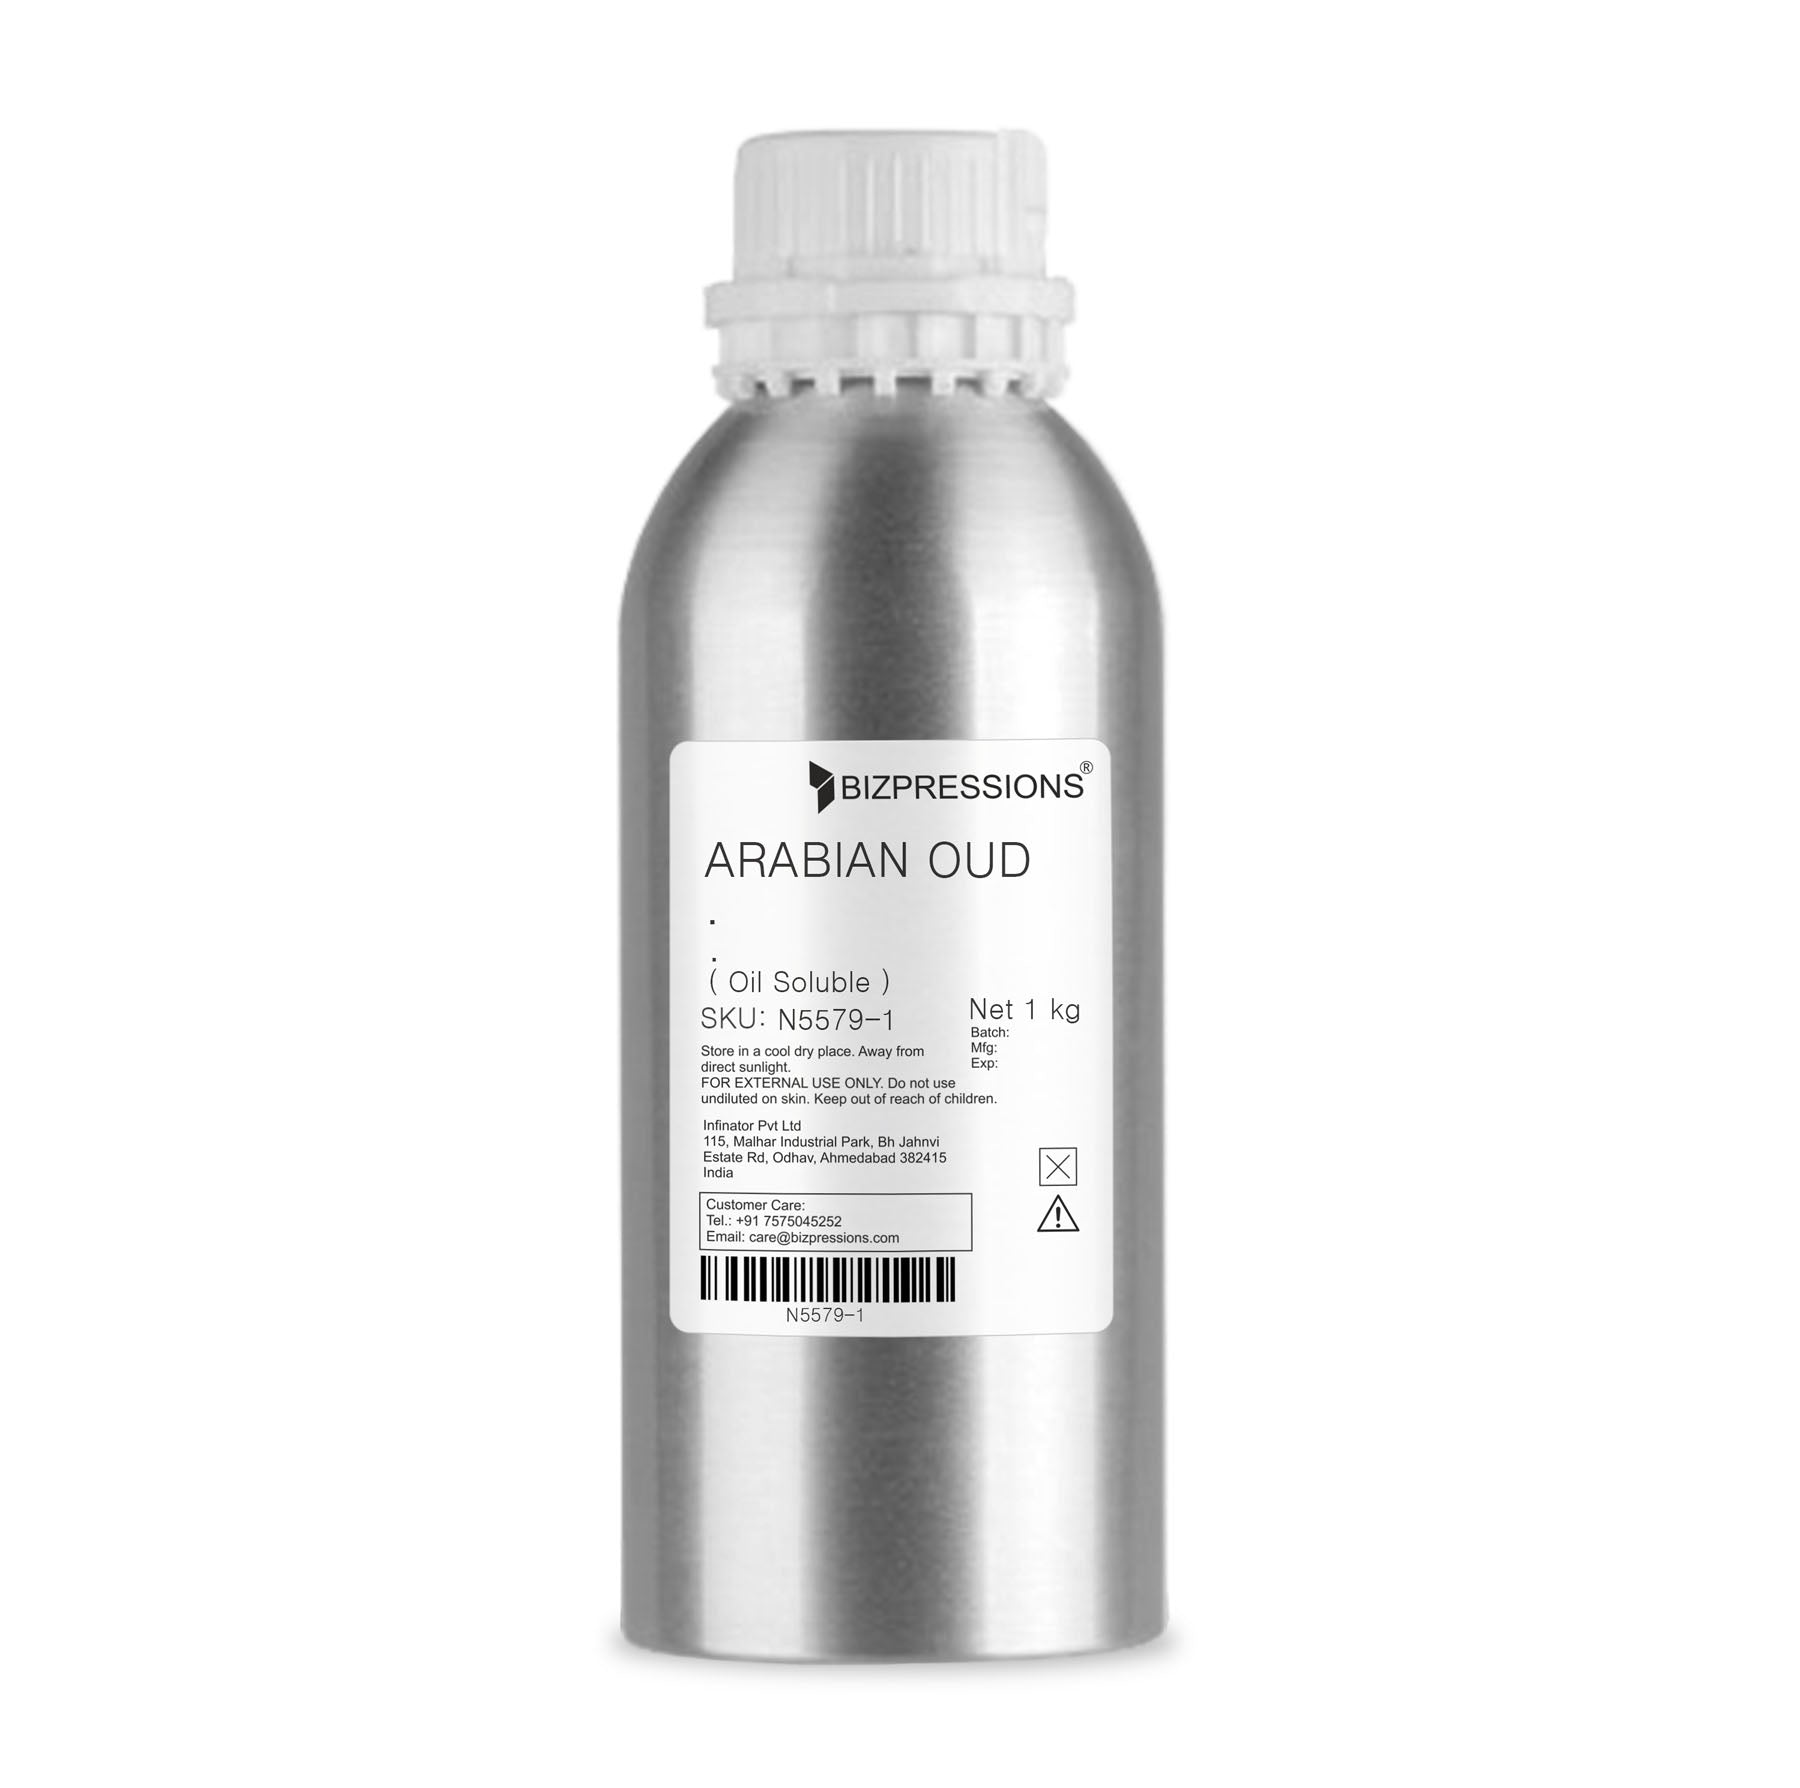 ARABIAN OUD - Fragrance ( Oil Soluble ) - 1 kg